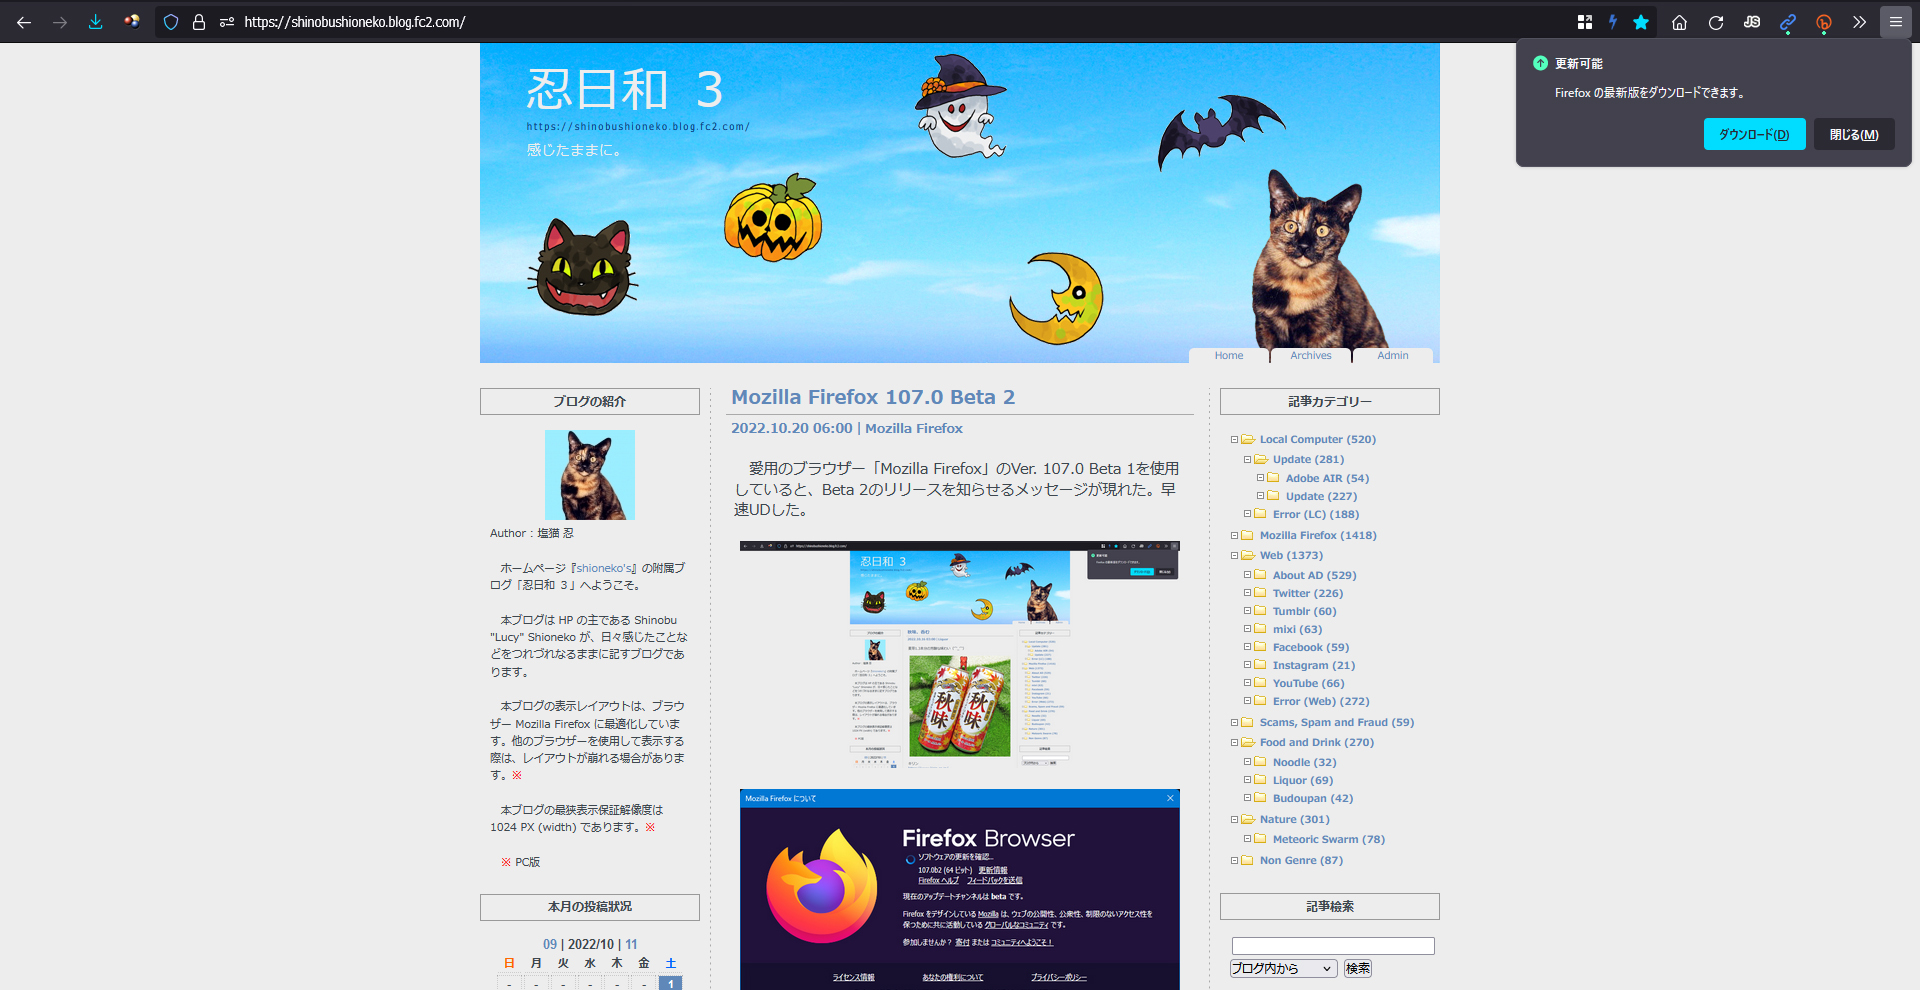 Mozilla Firefox 107.0 Beta 3